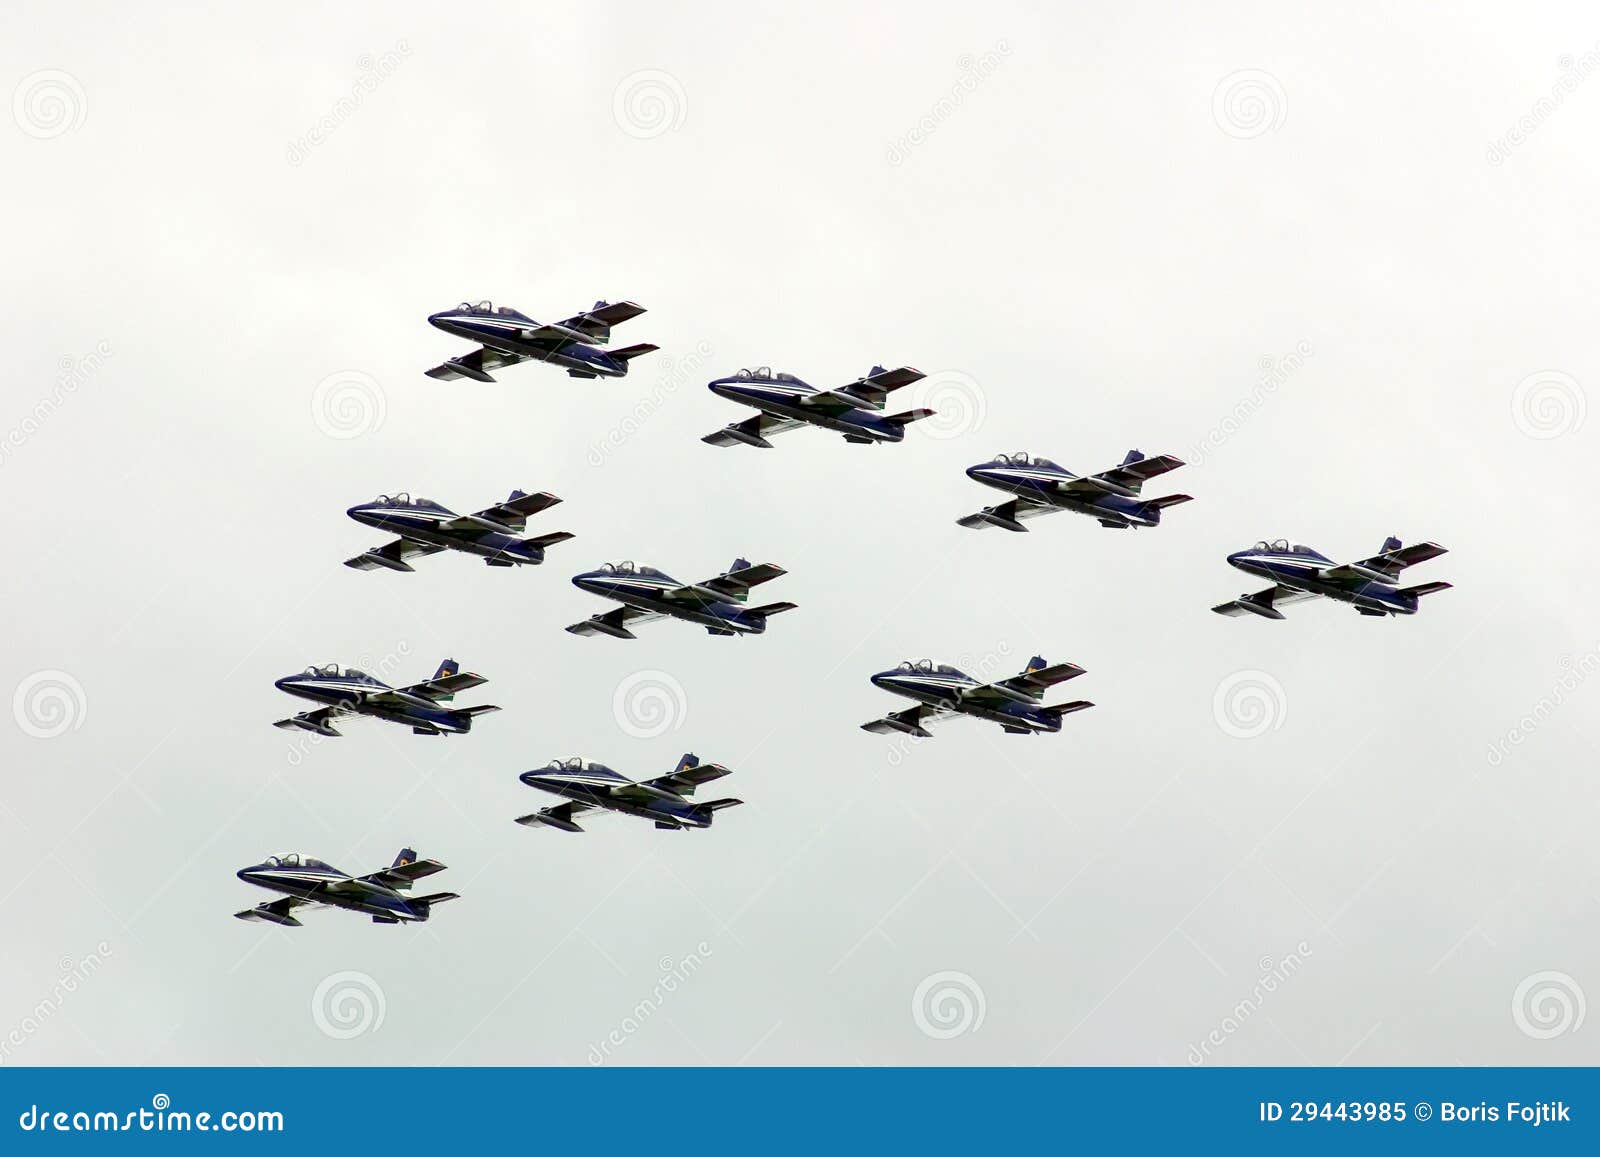 jets formation